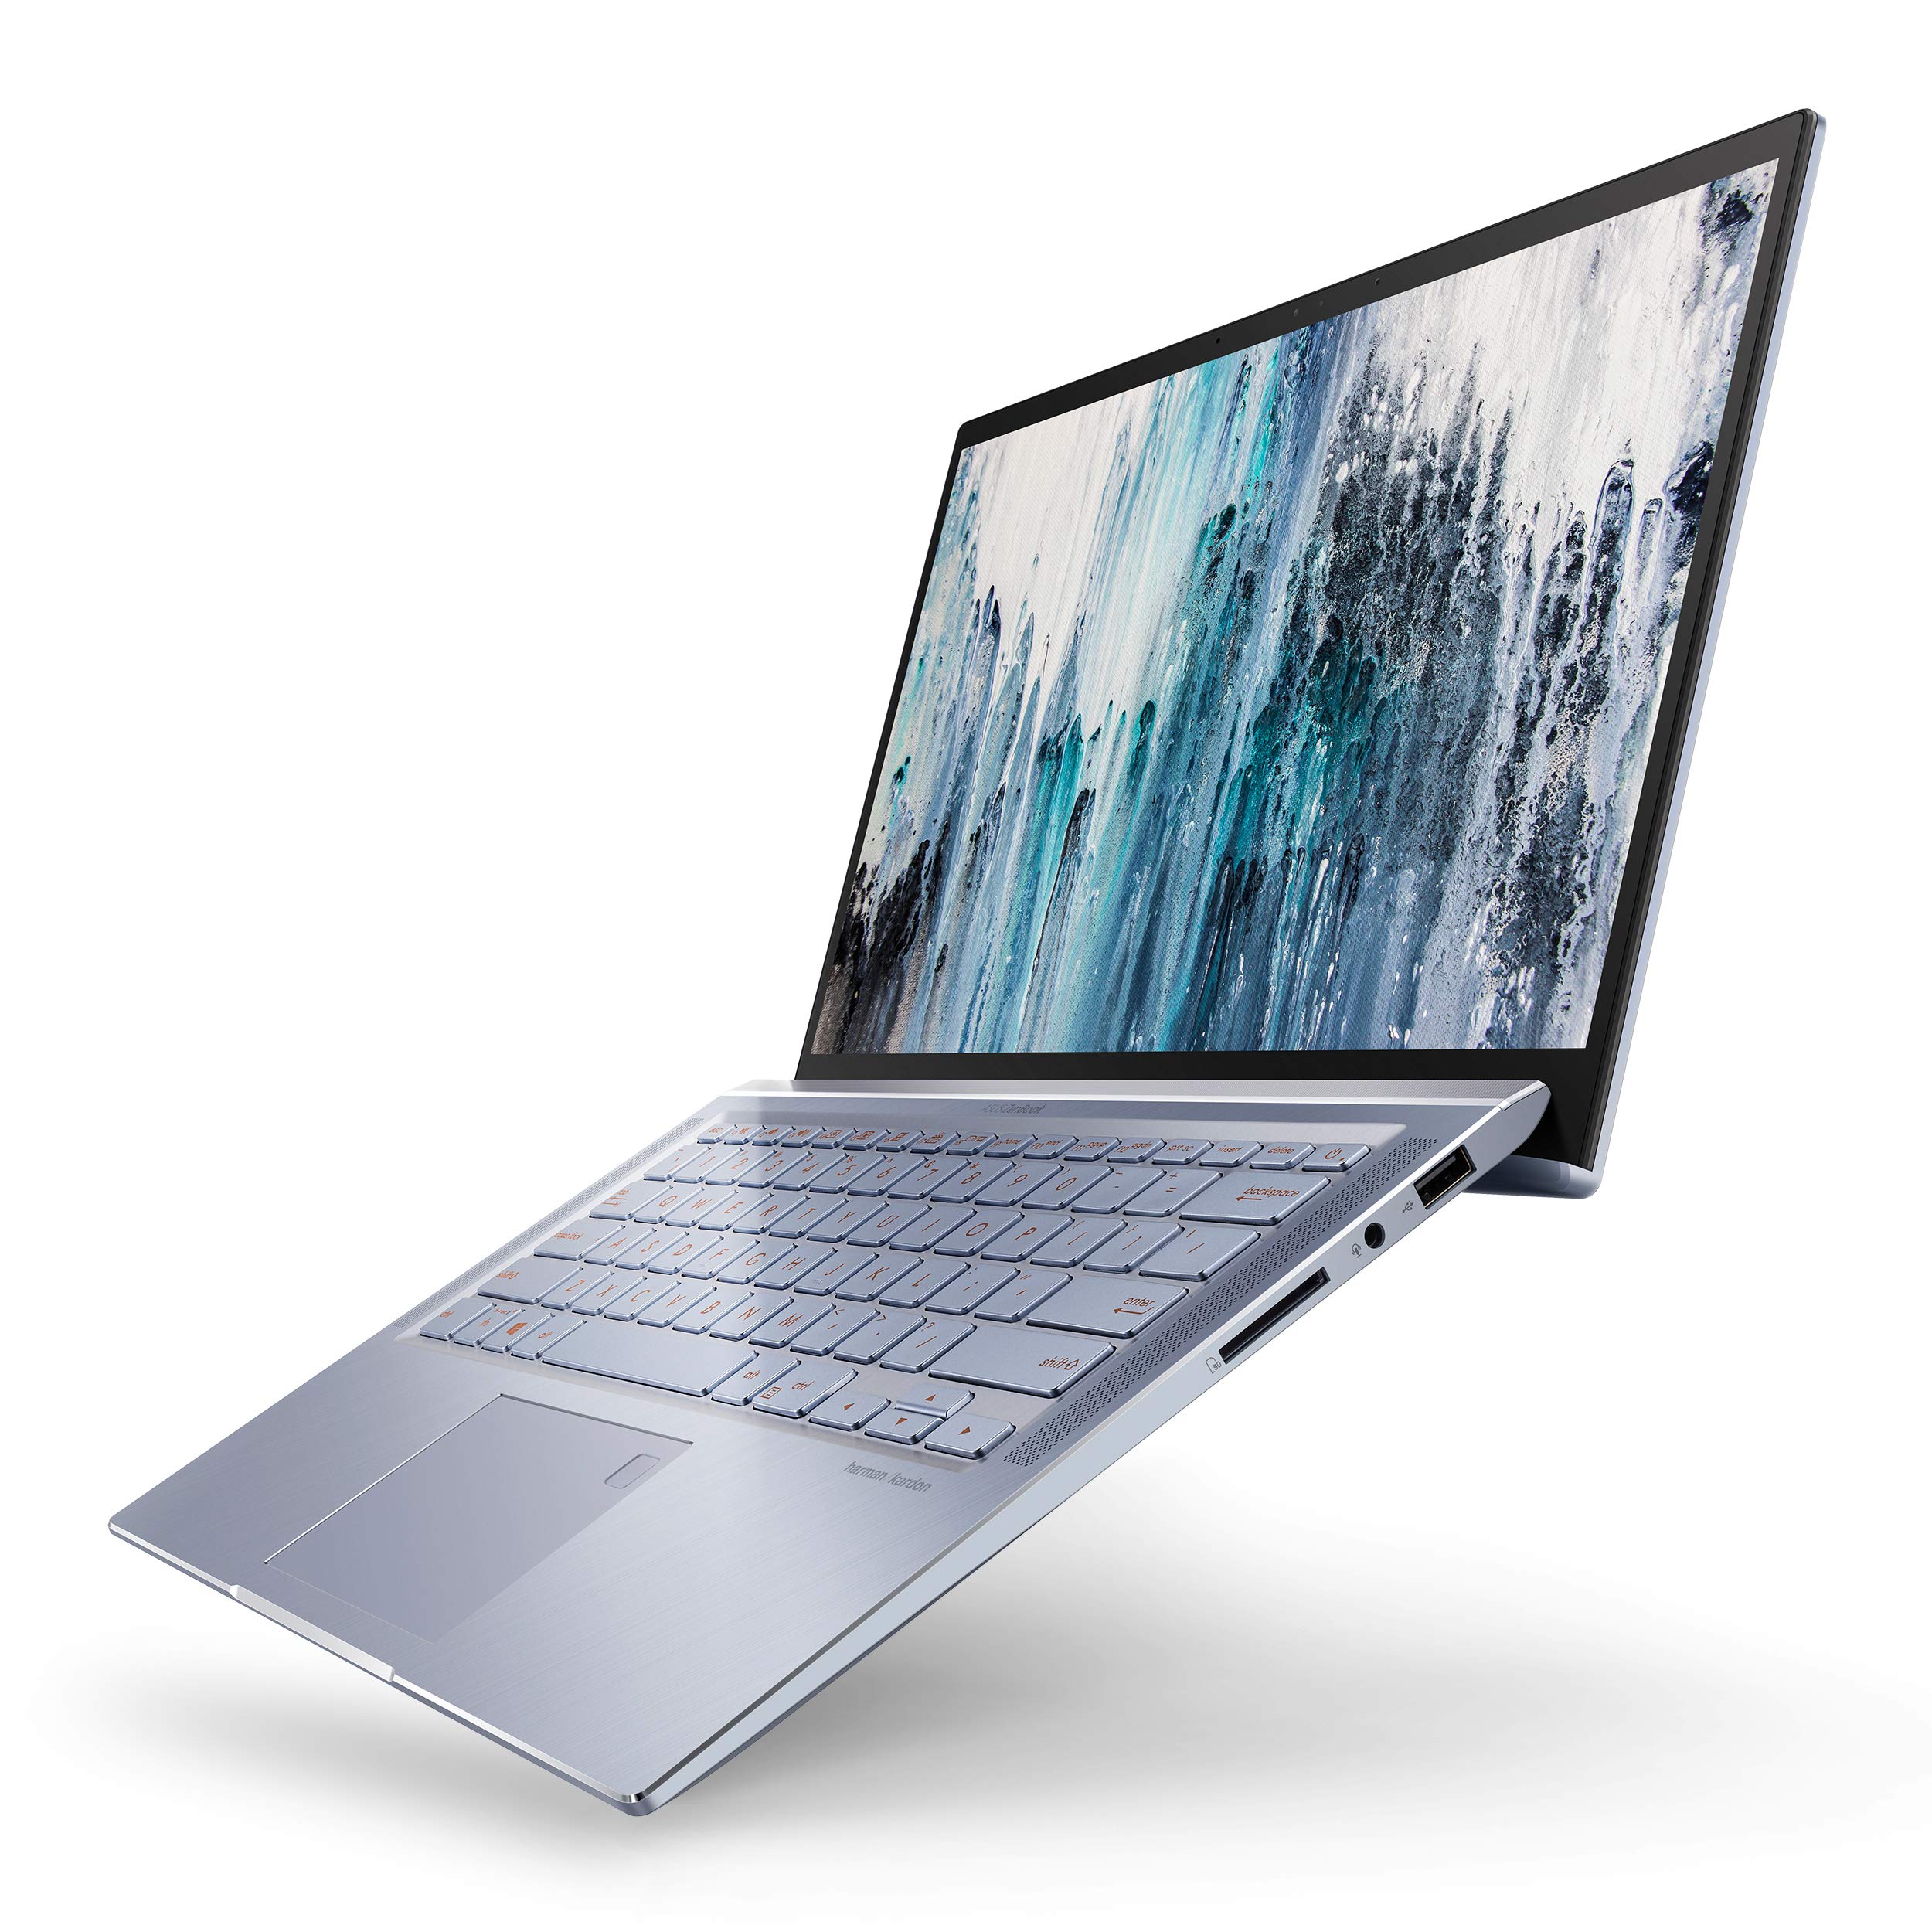 Book Cover ASUS ZenBook 14 Ultra Thin and Light Laptop, 4-Way NanoEdge 14â€ FHD, Intel Core i5-8265U, 8GB RAM, 256GB NVMe PCIe SSD, NumberPad, Wi-Fi 5, Windows 10, Silver Blue, UX431FA-ES74